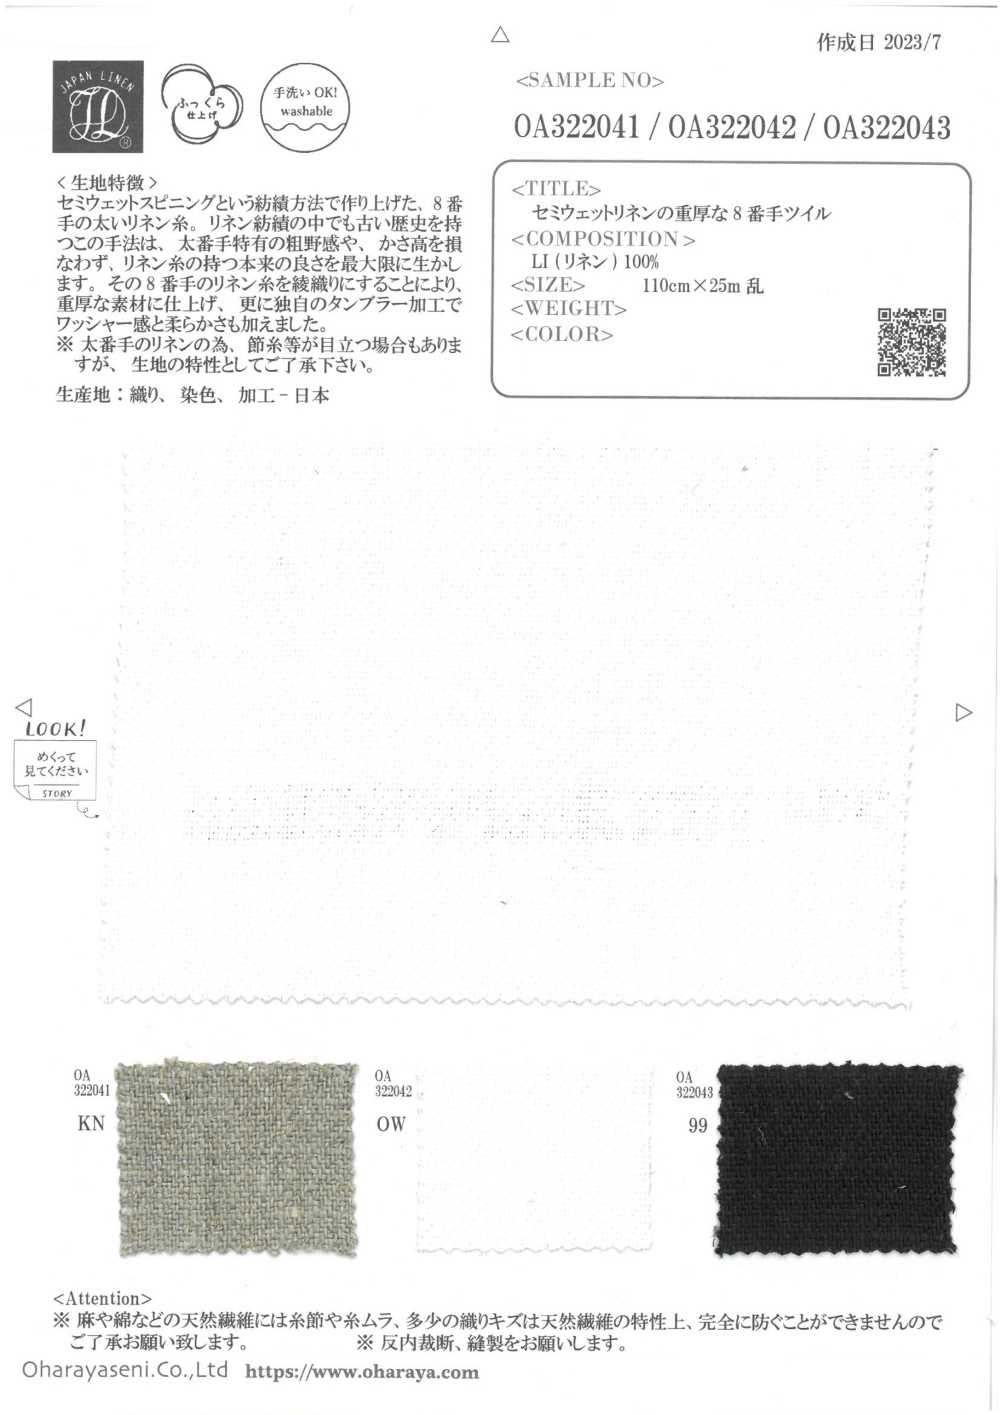 OA322043 Sarga Pesada N.º 8 De Lino Semihúmedo[Fabrica Textil] Oharayaseni